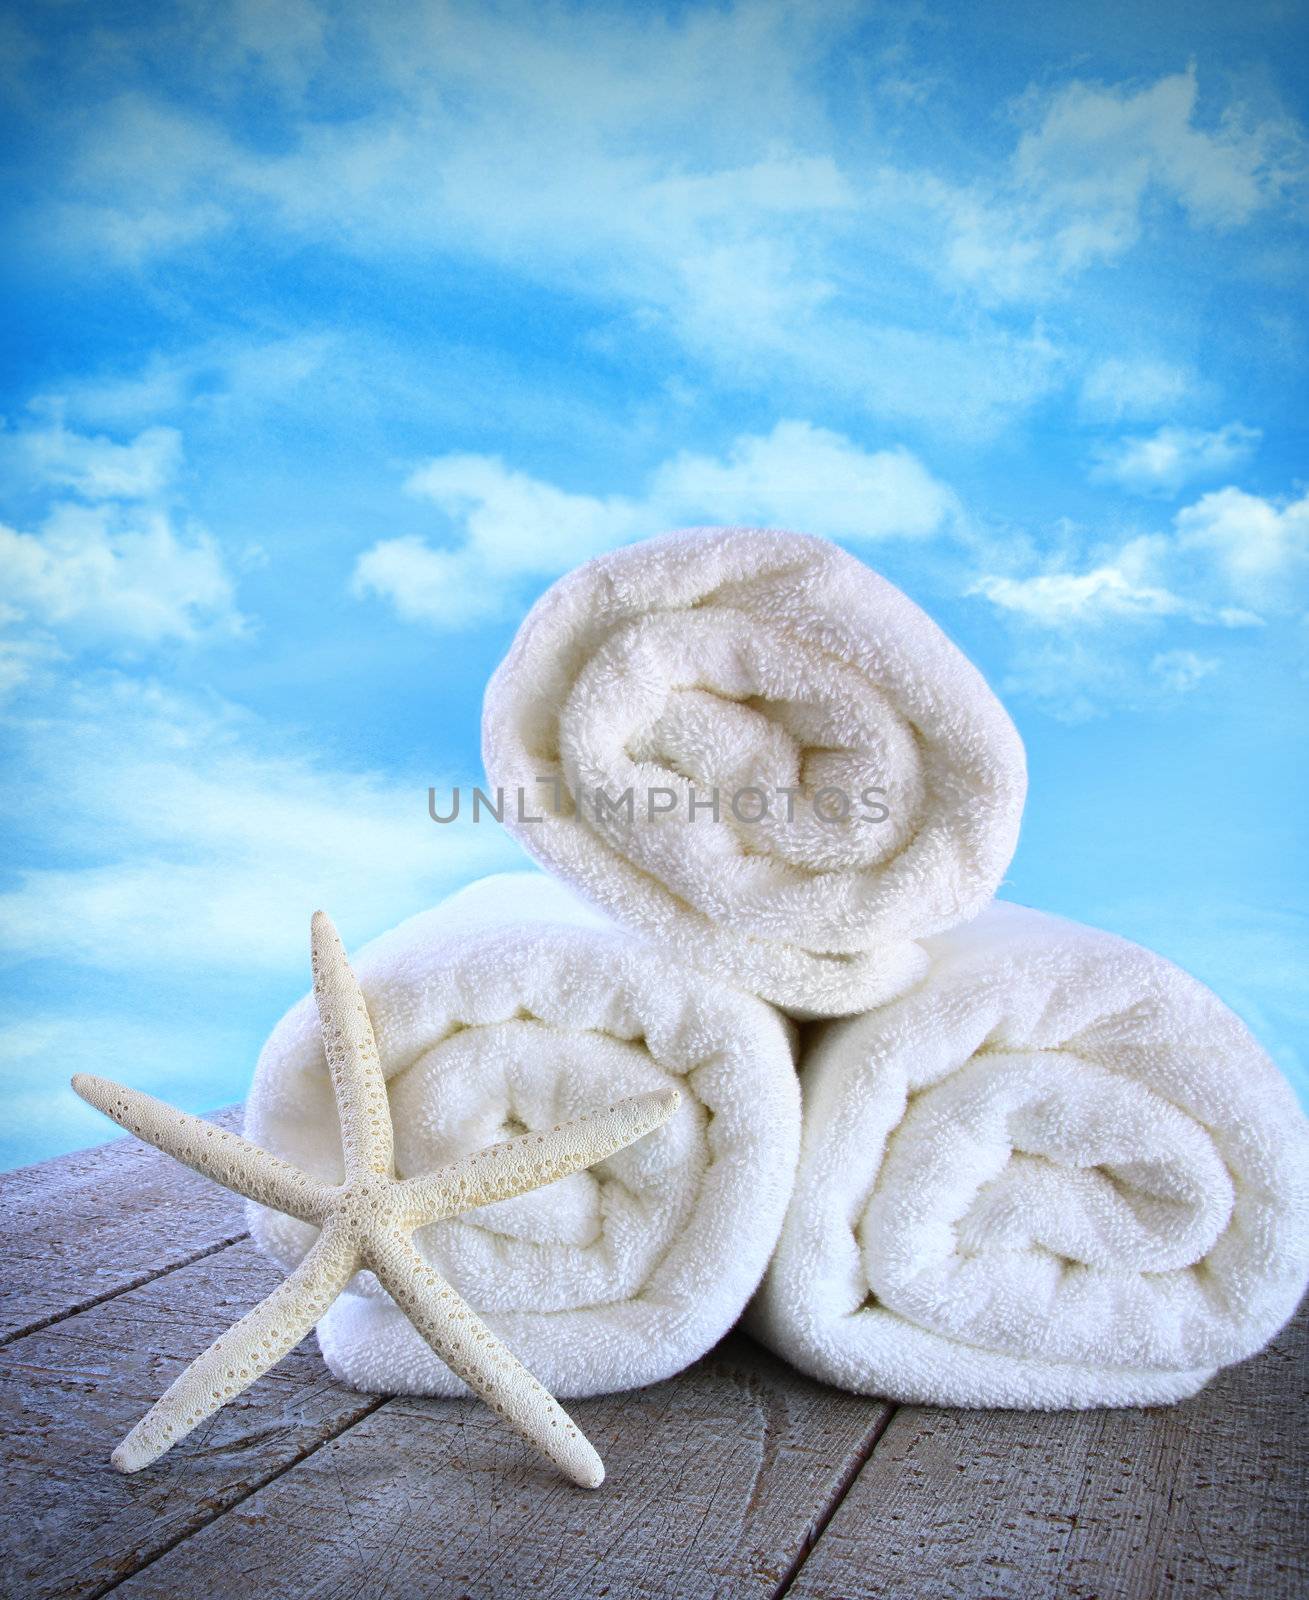 Fluffy fresh towels against a blue sky